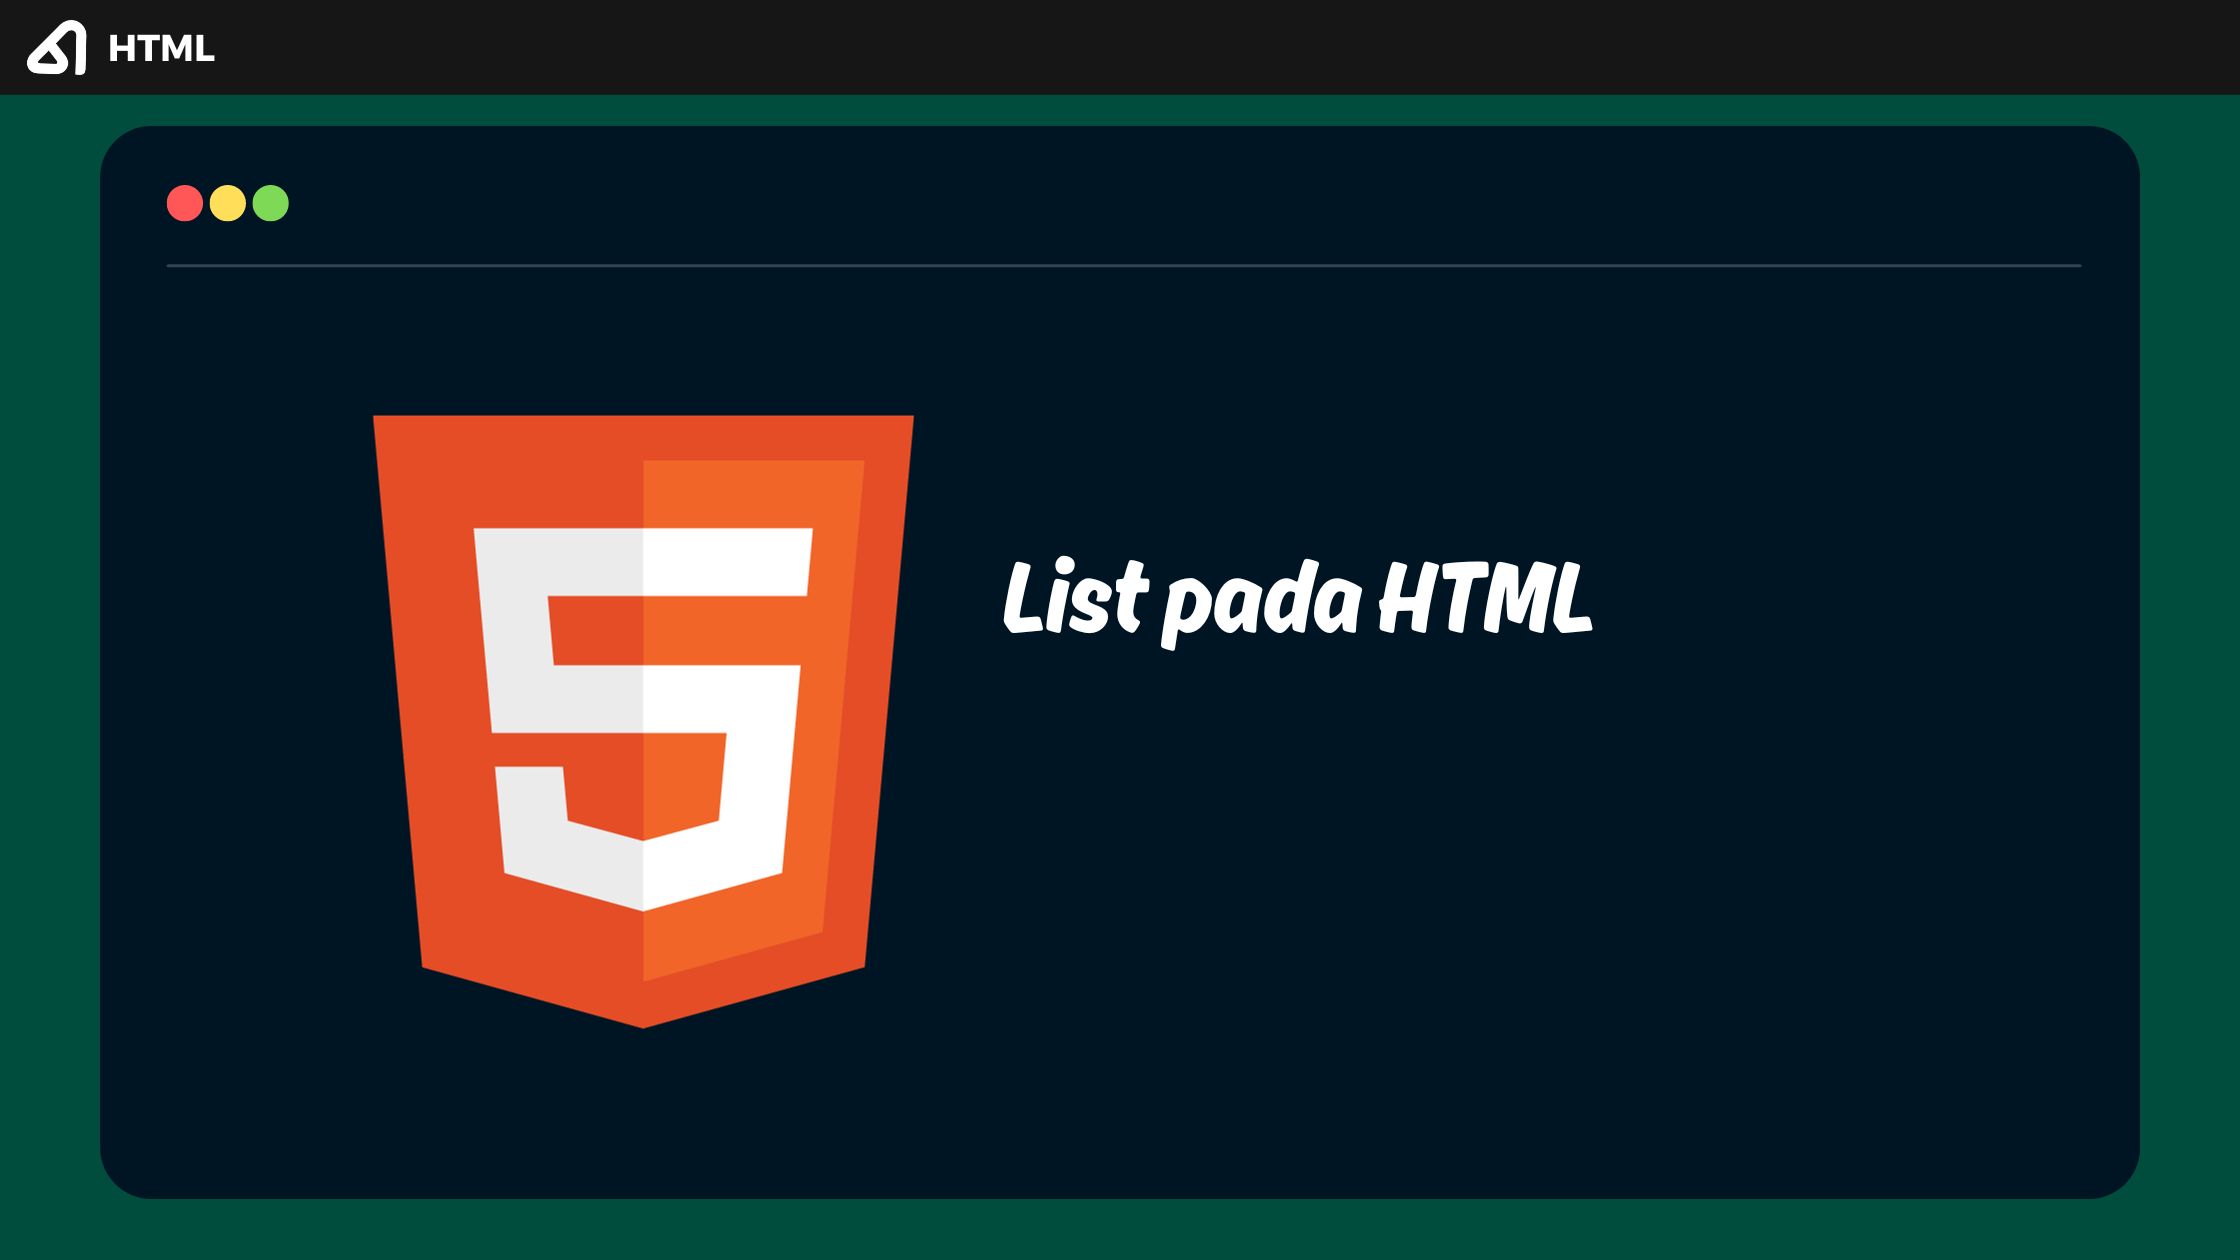 List pada HTML